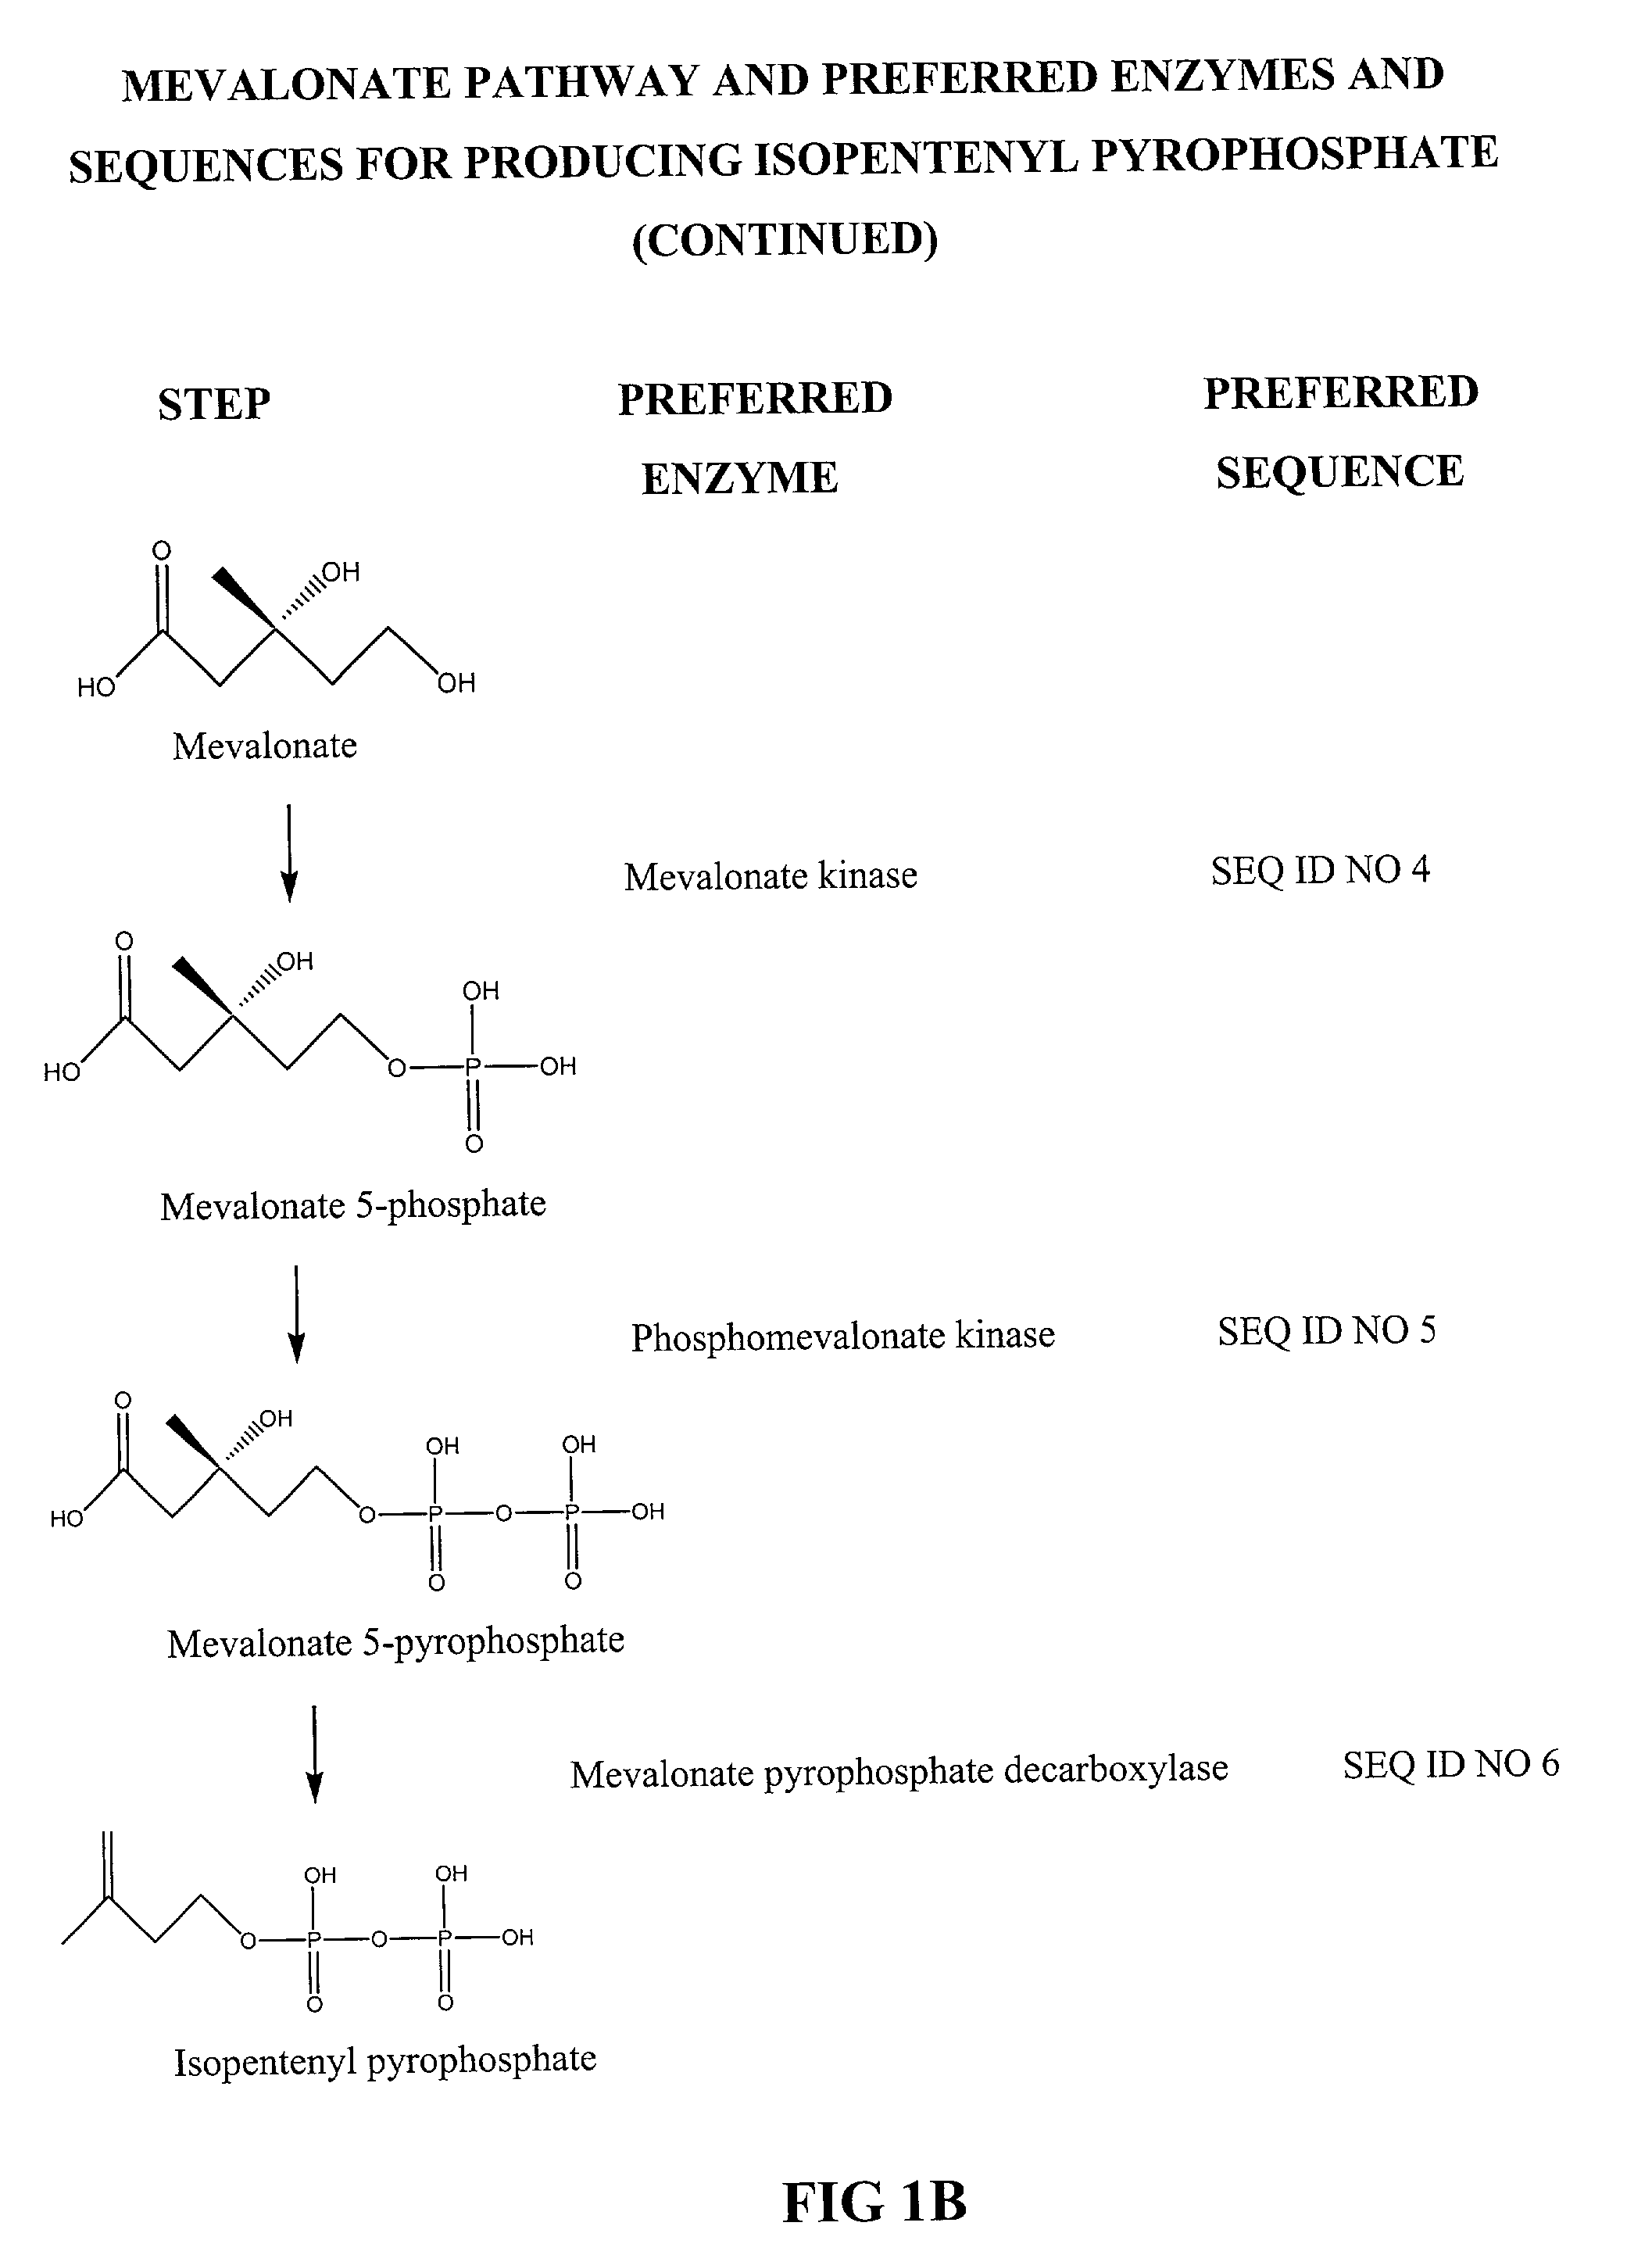 Biosynthesis of isopentenyl pyrophosphate